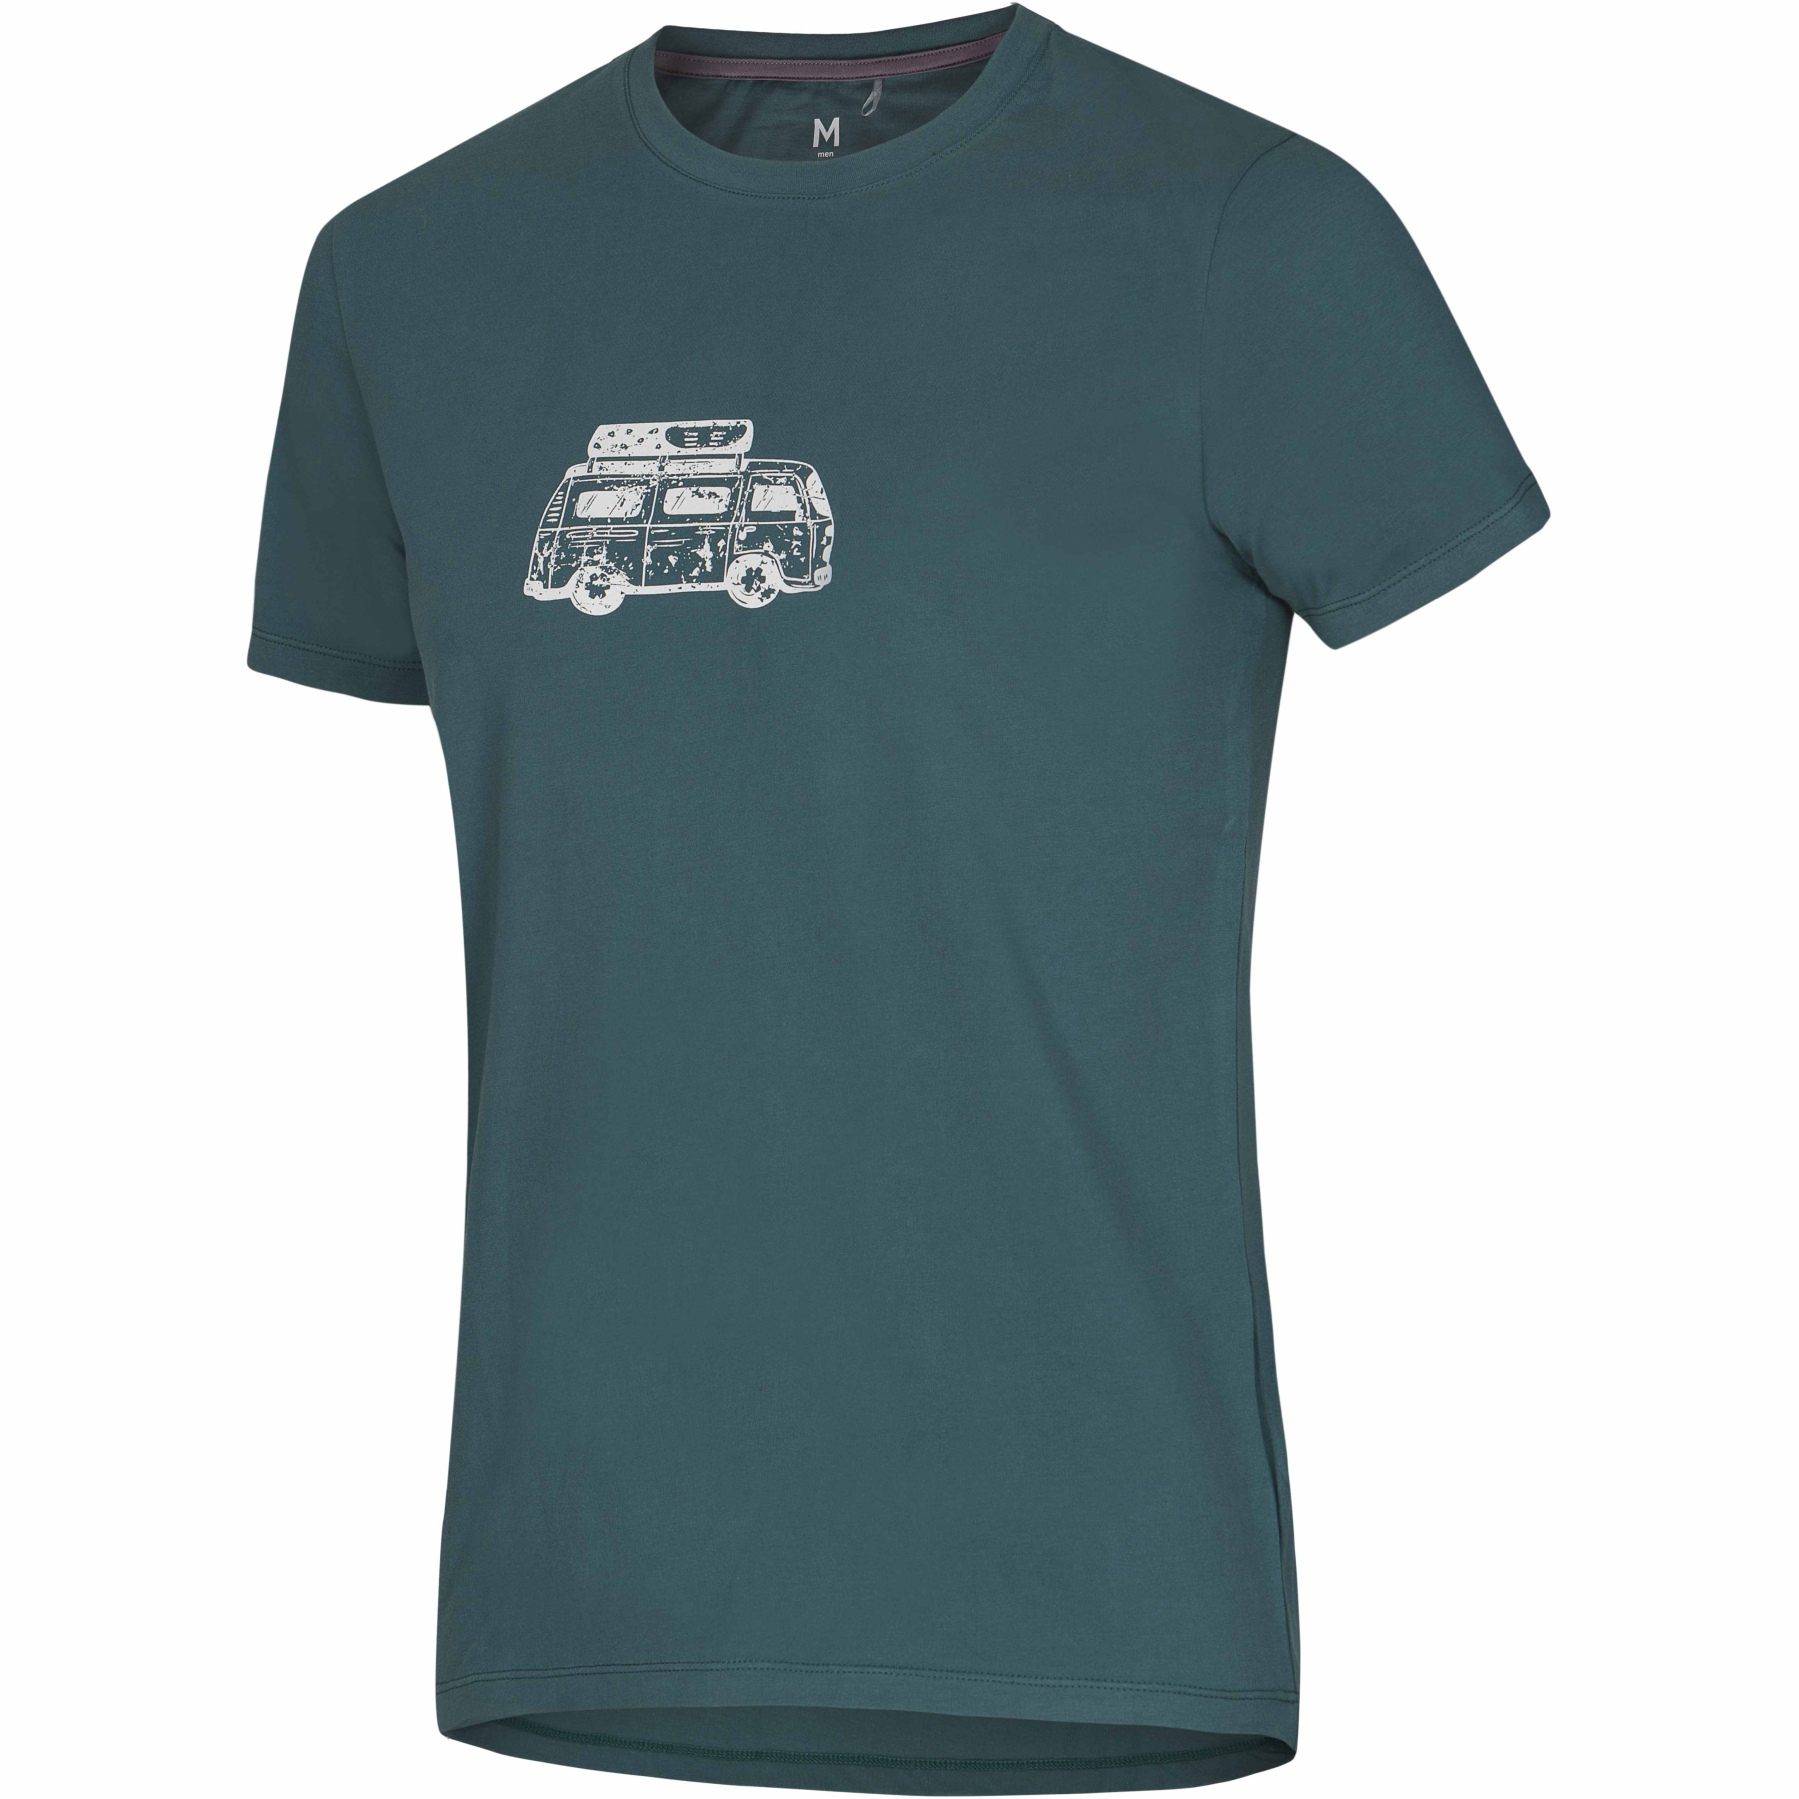 Produktbild von Ocún Classic T - Herren T-Shirt - petrol mediterranea van